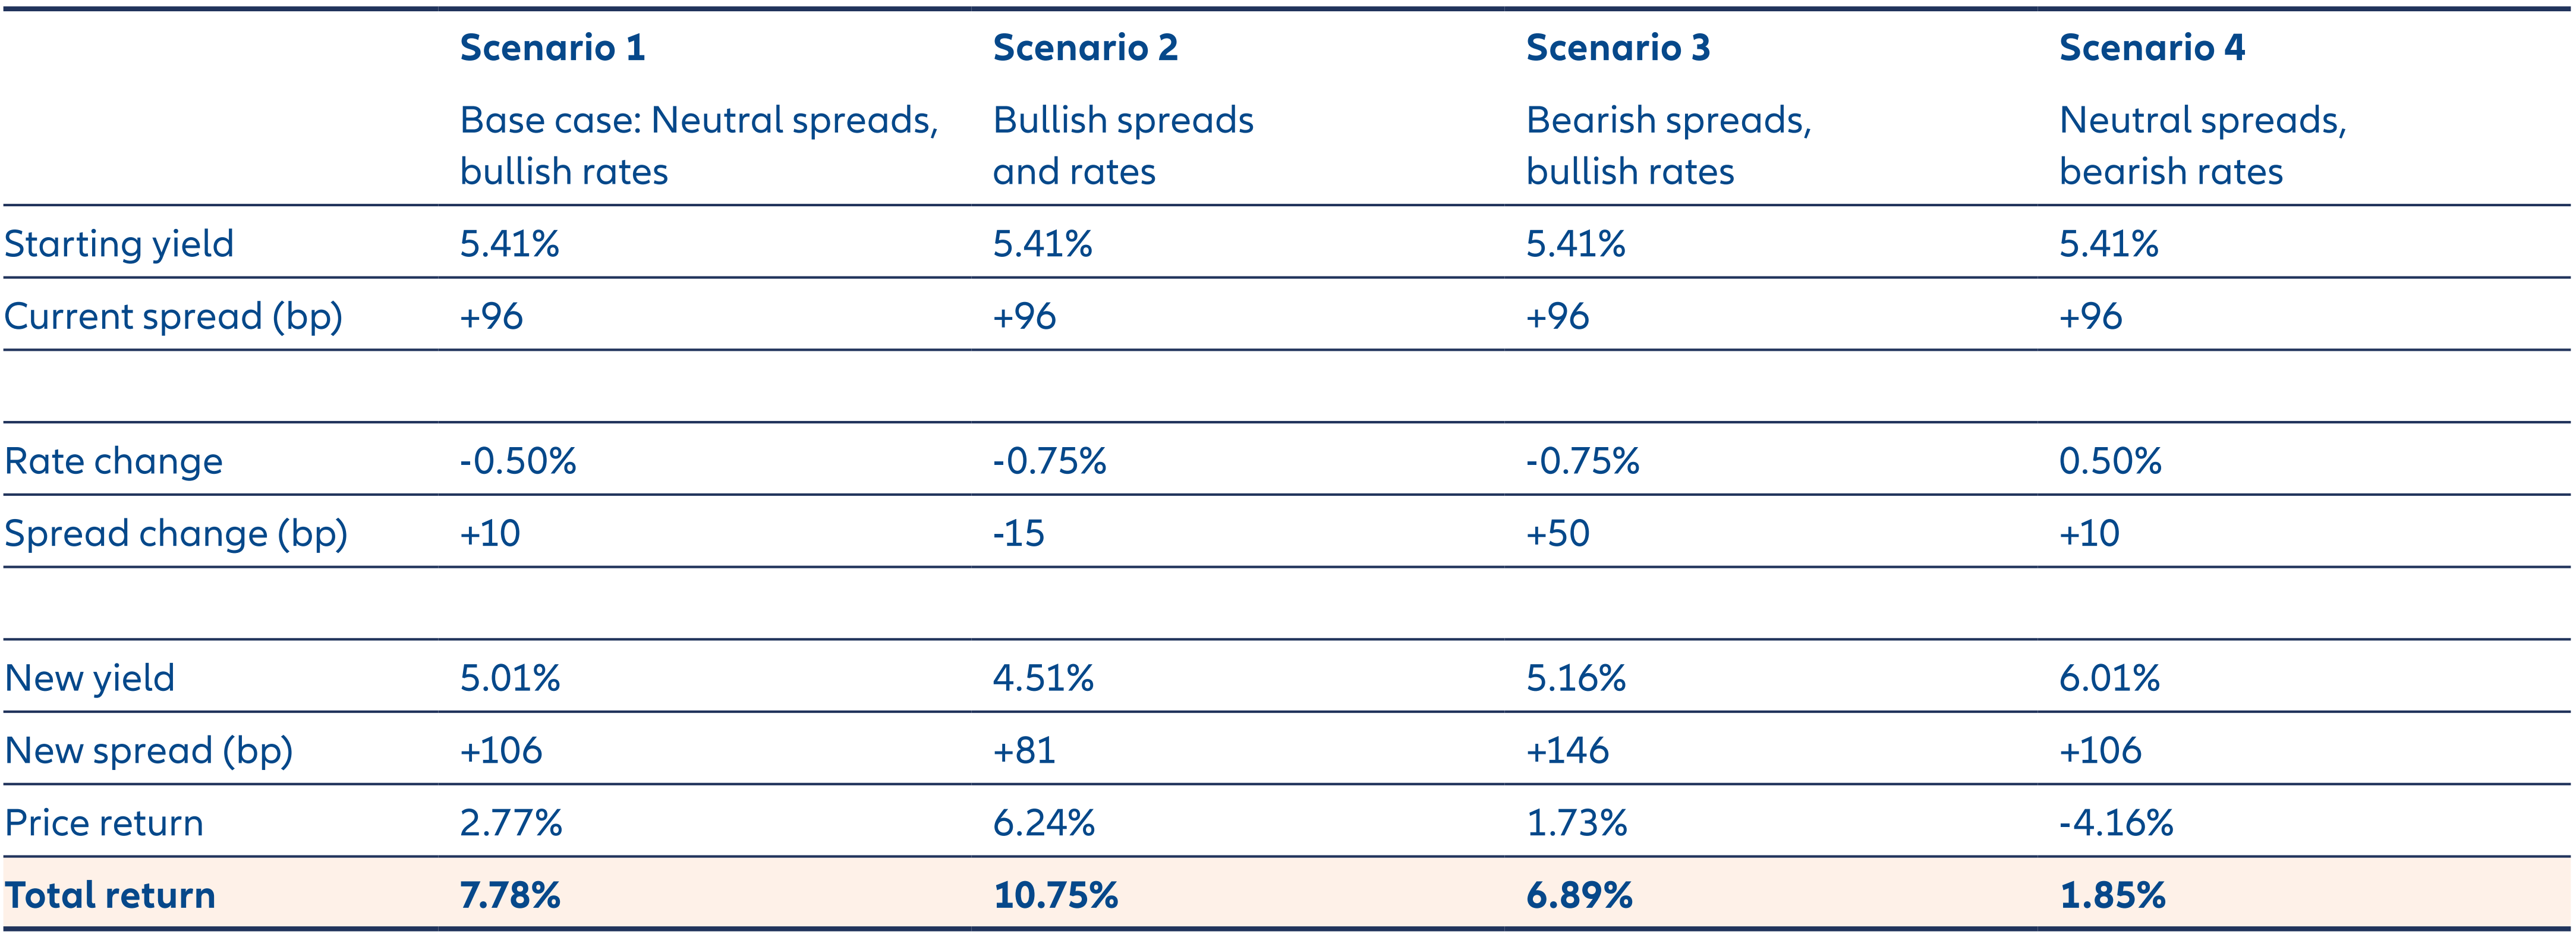 Exhibit 2: Our base case scenario shows attractive estimated total return projections for IG bonds